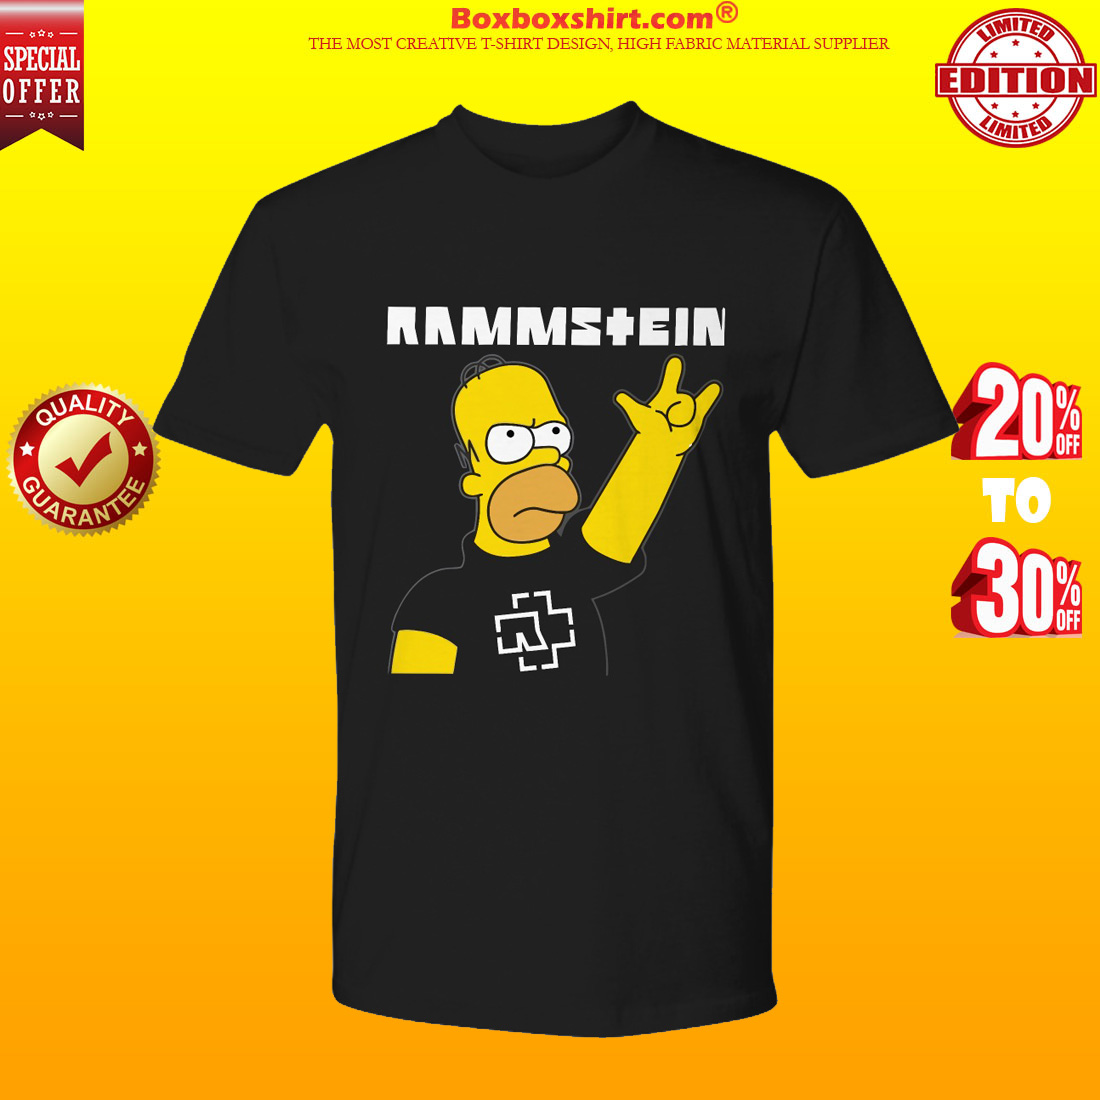 Rammstein simpson premium tee shirt